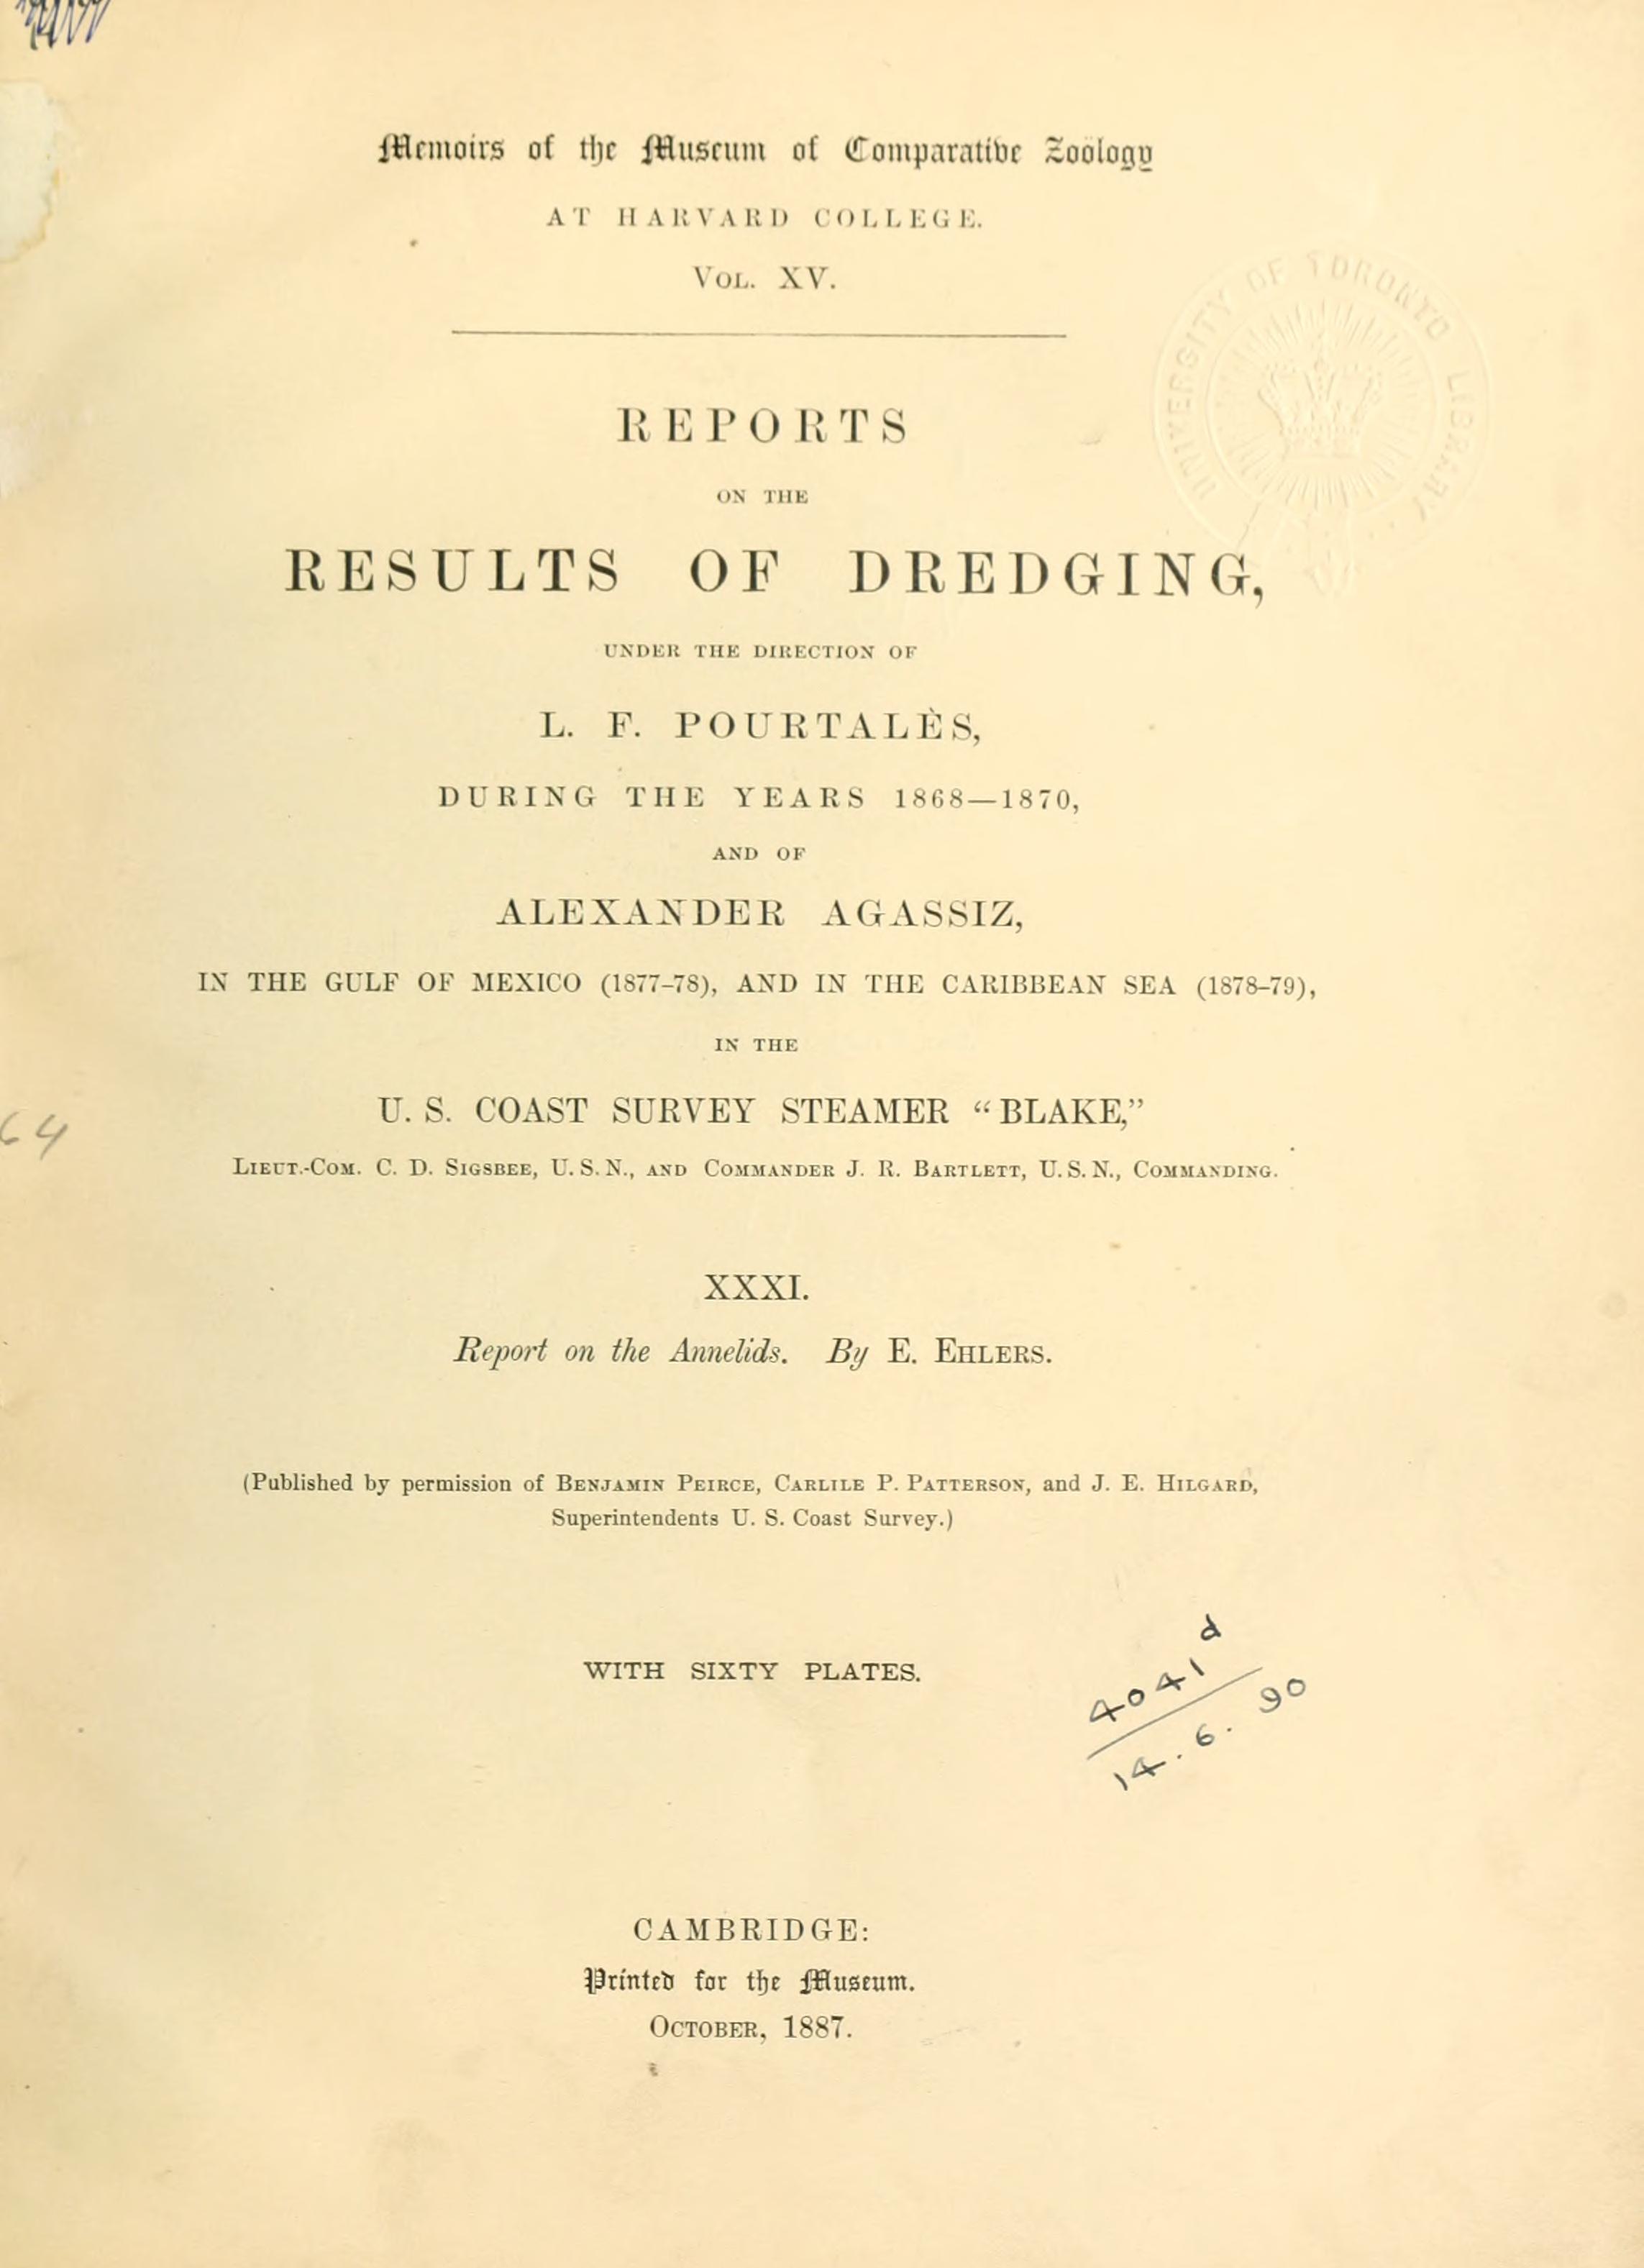 Media of type text, Ehlers 1887. Description:MCZ Memoirs Vol. XV no. 1